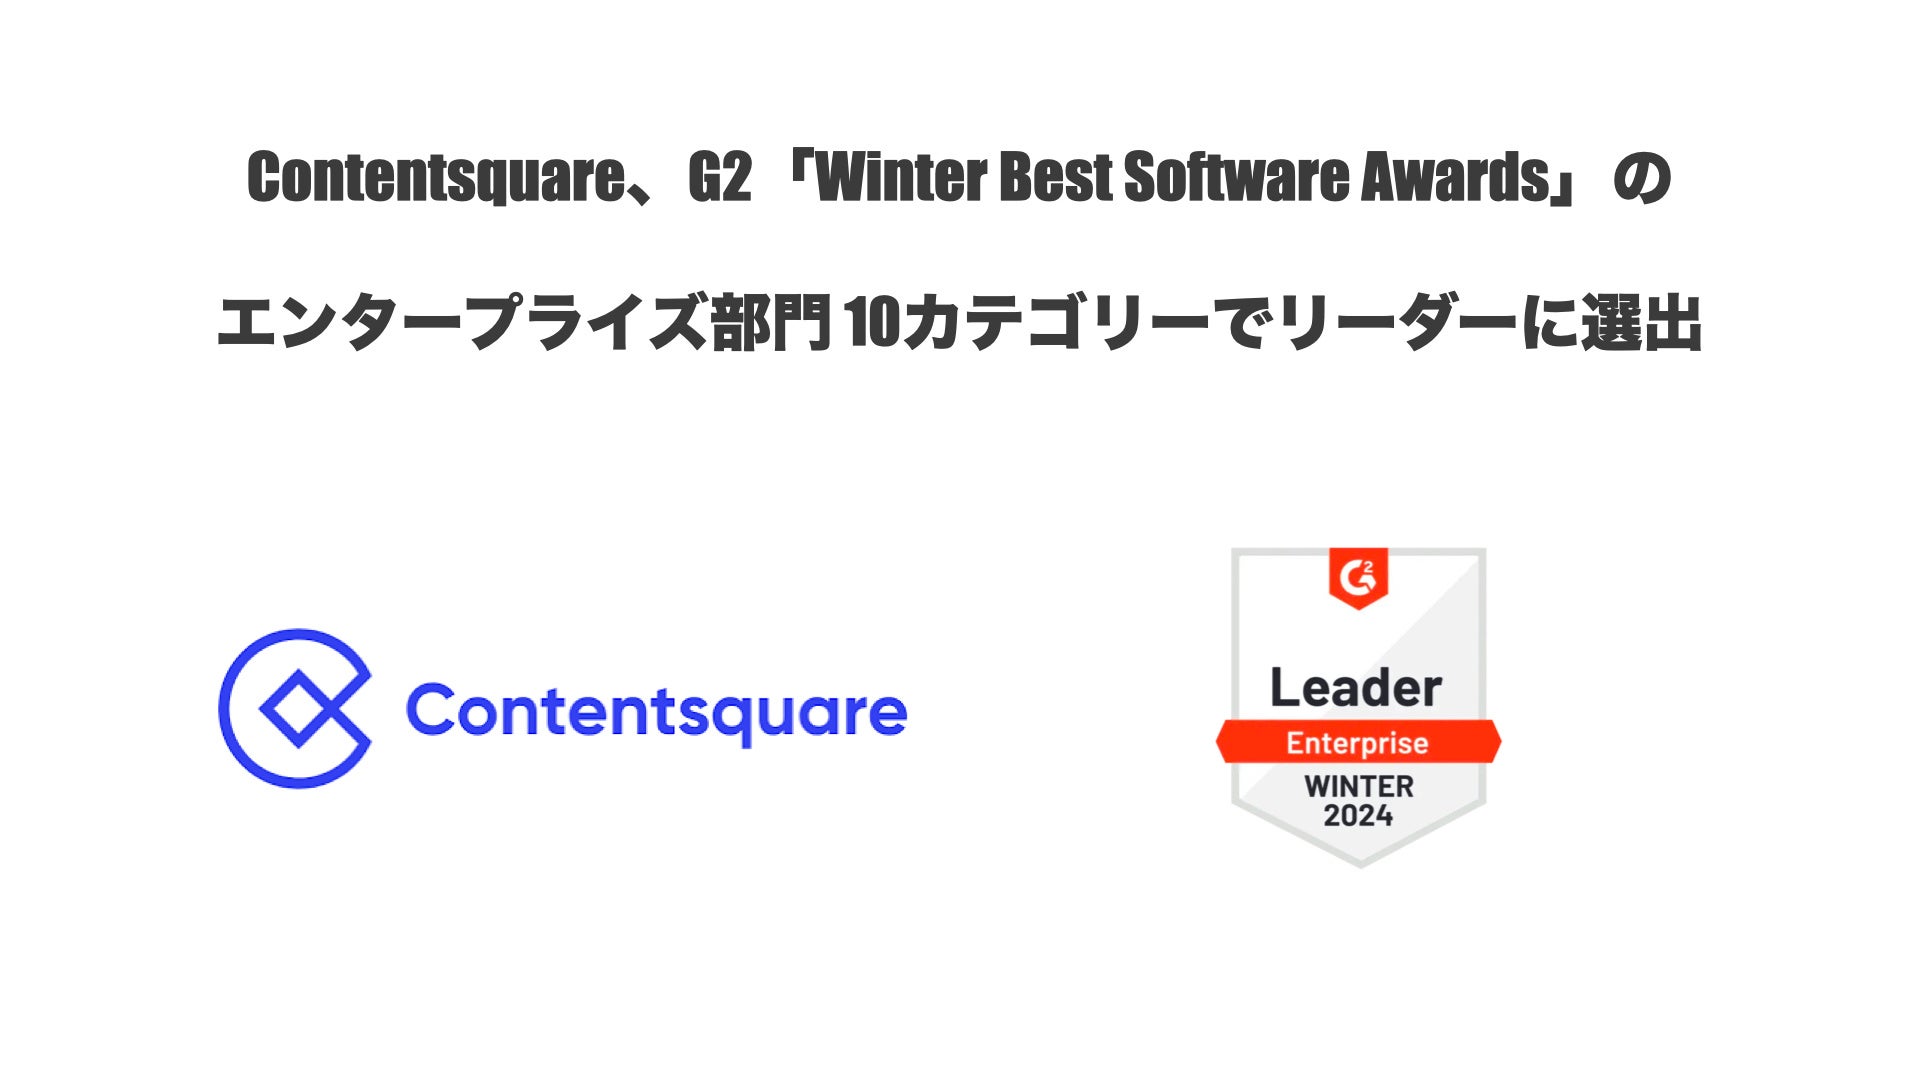 ContentsquareAG2uWinter Best Software AwardsṽG^[vCY 10JeS[Ń[_[ɑIo